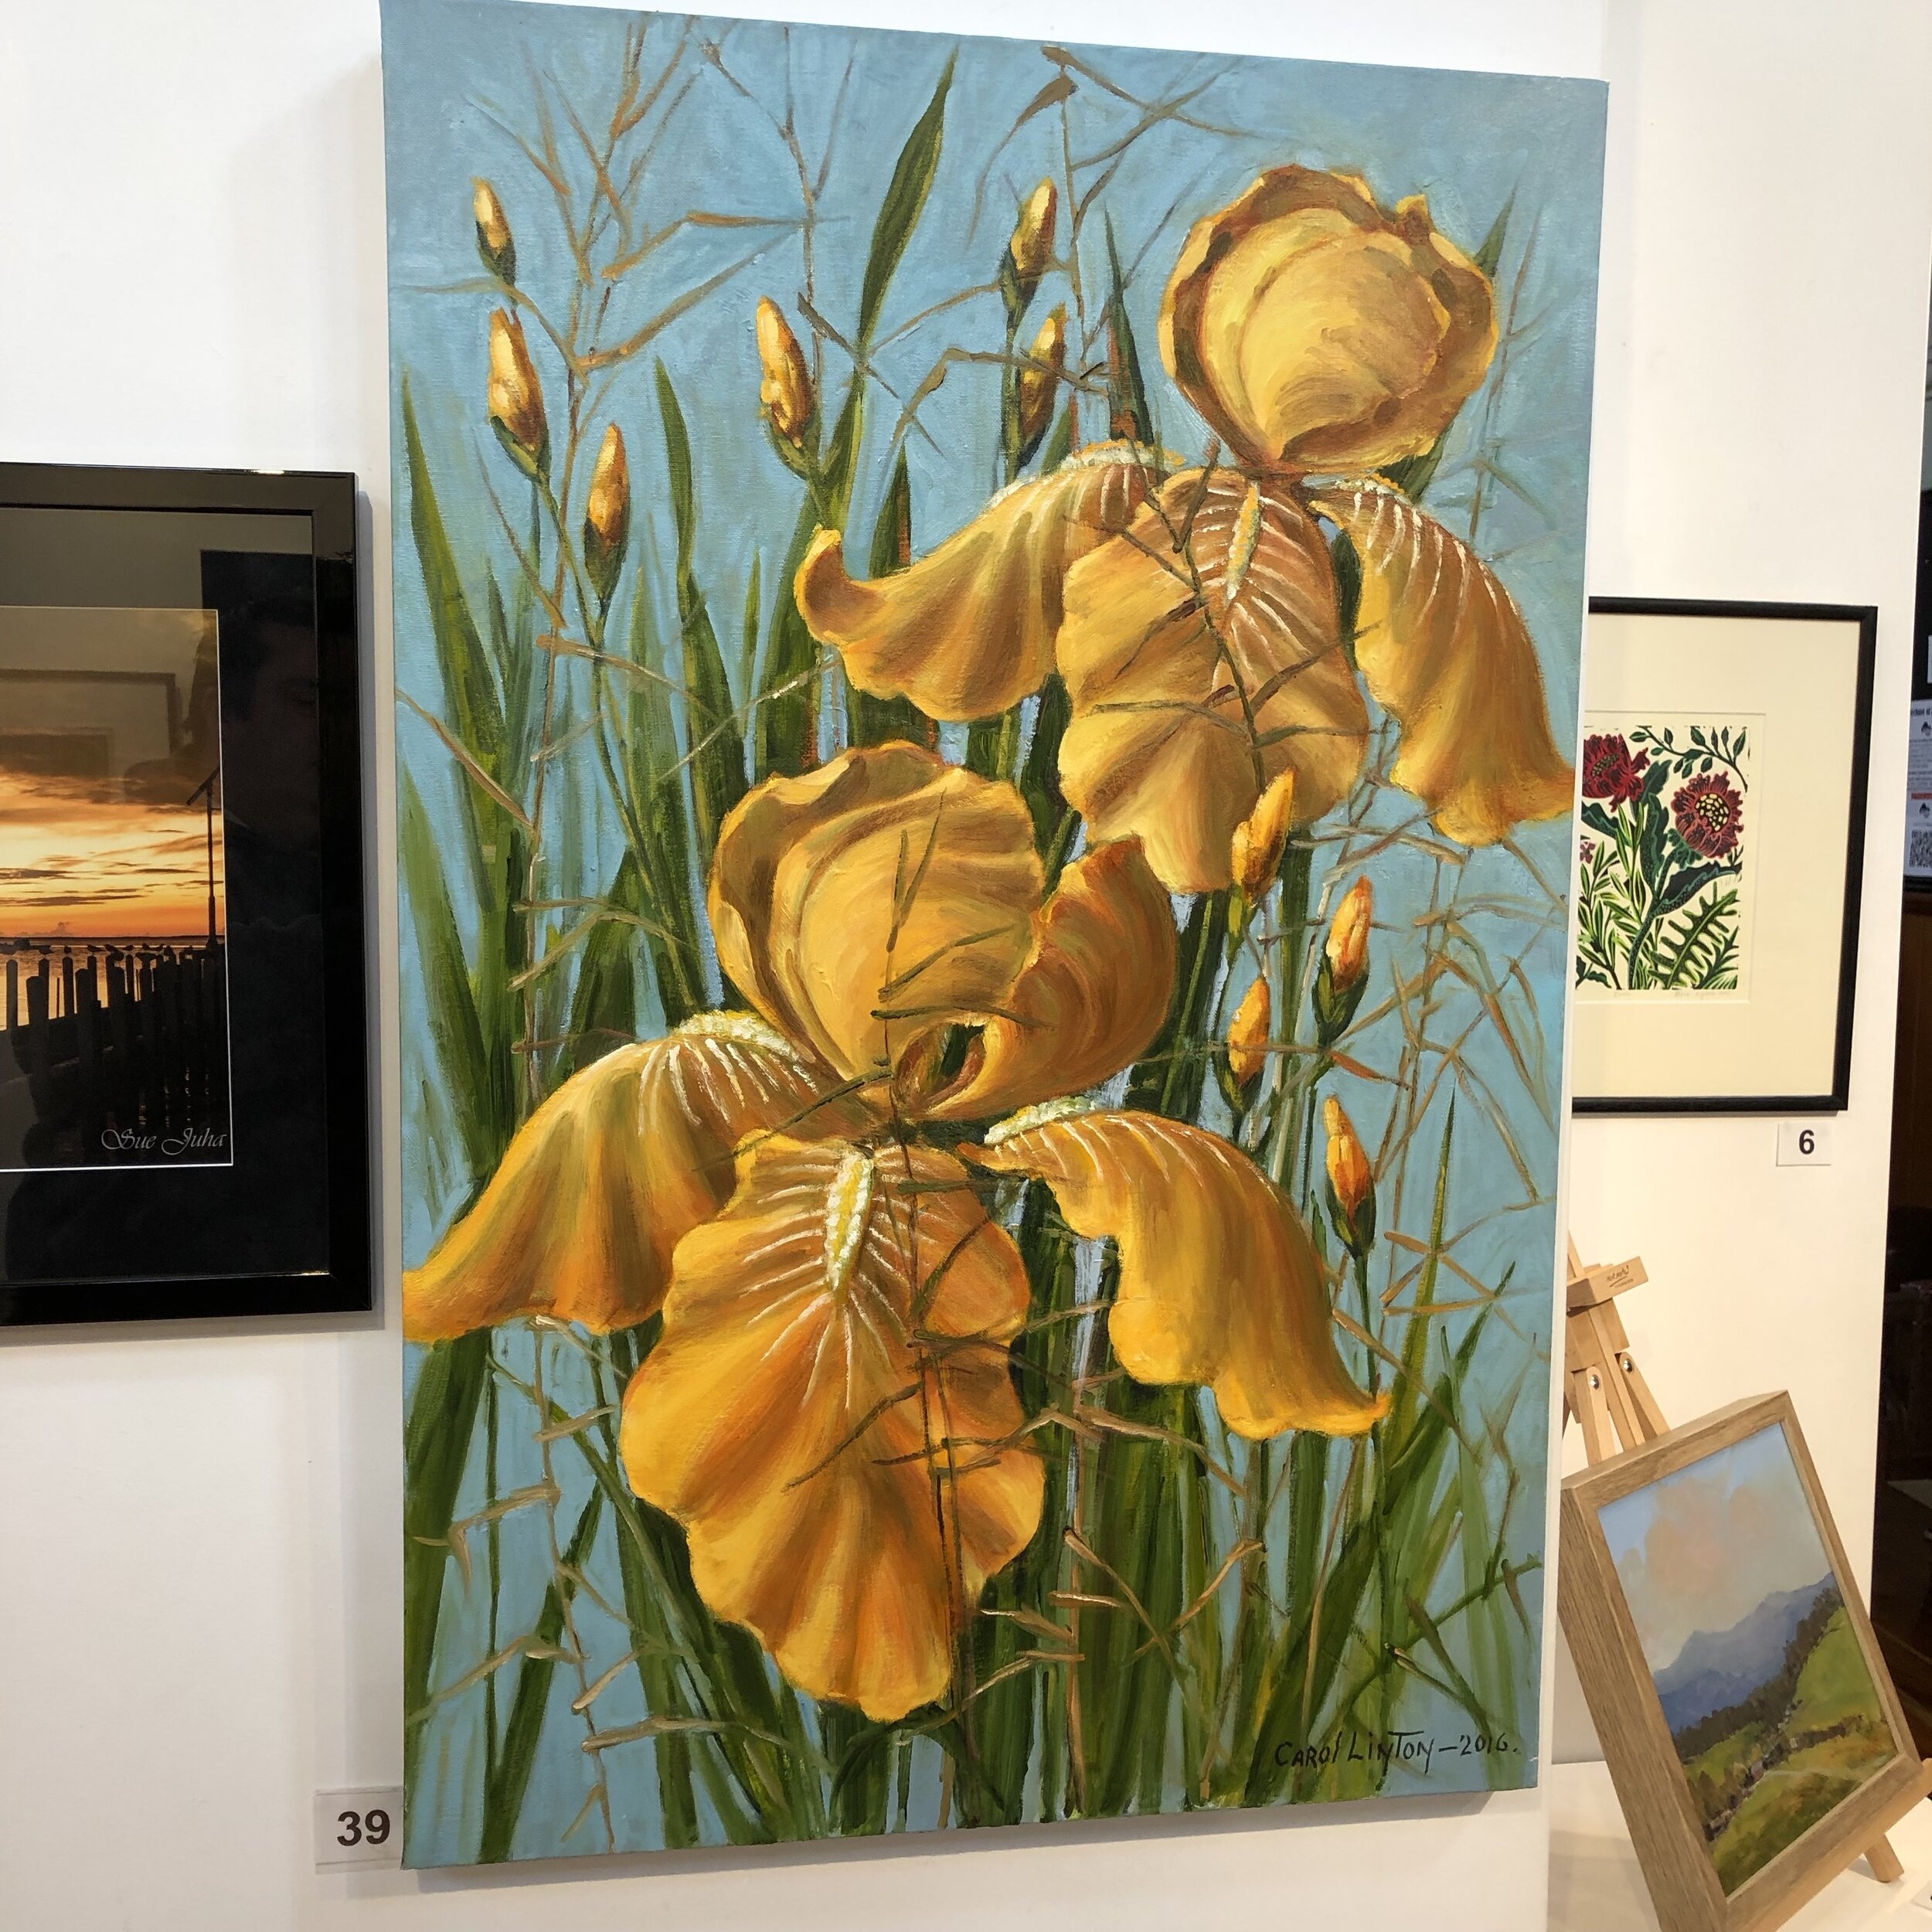 "Yellow Iris" by Carol Linton